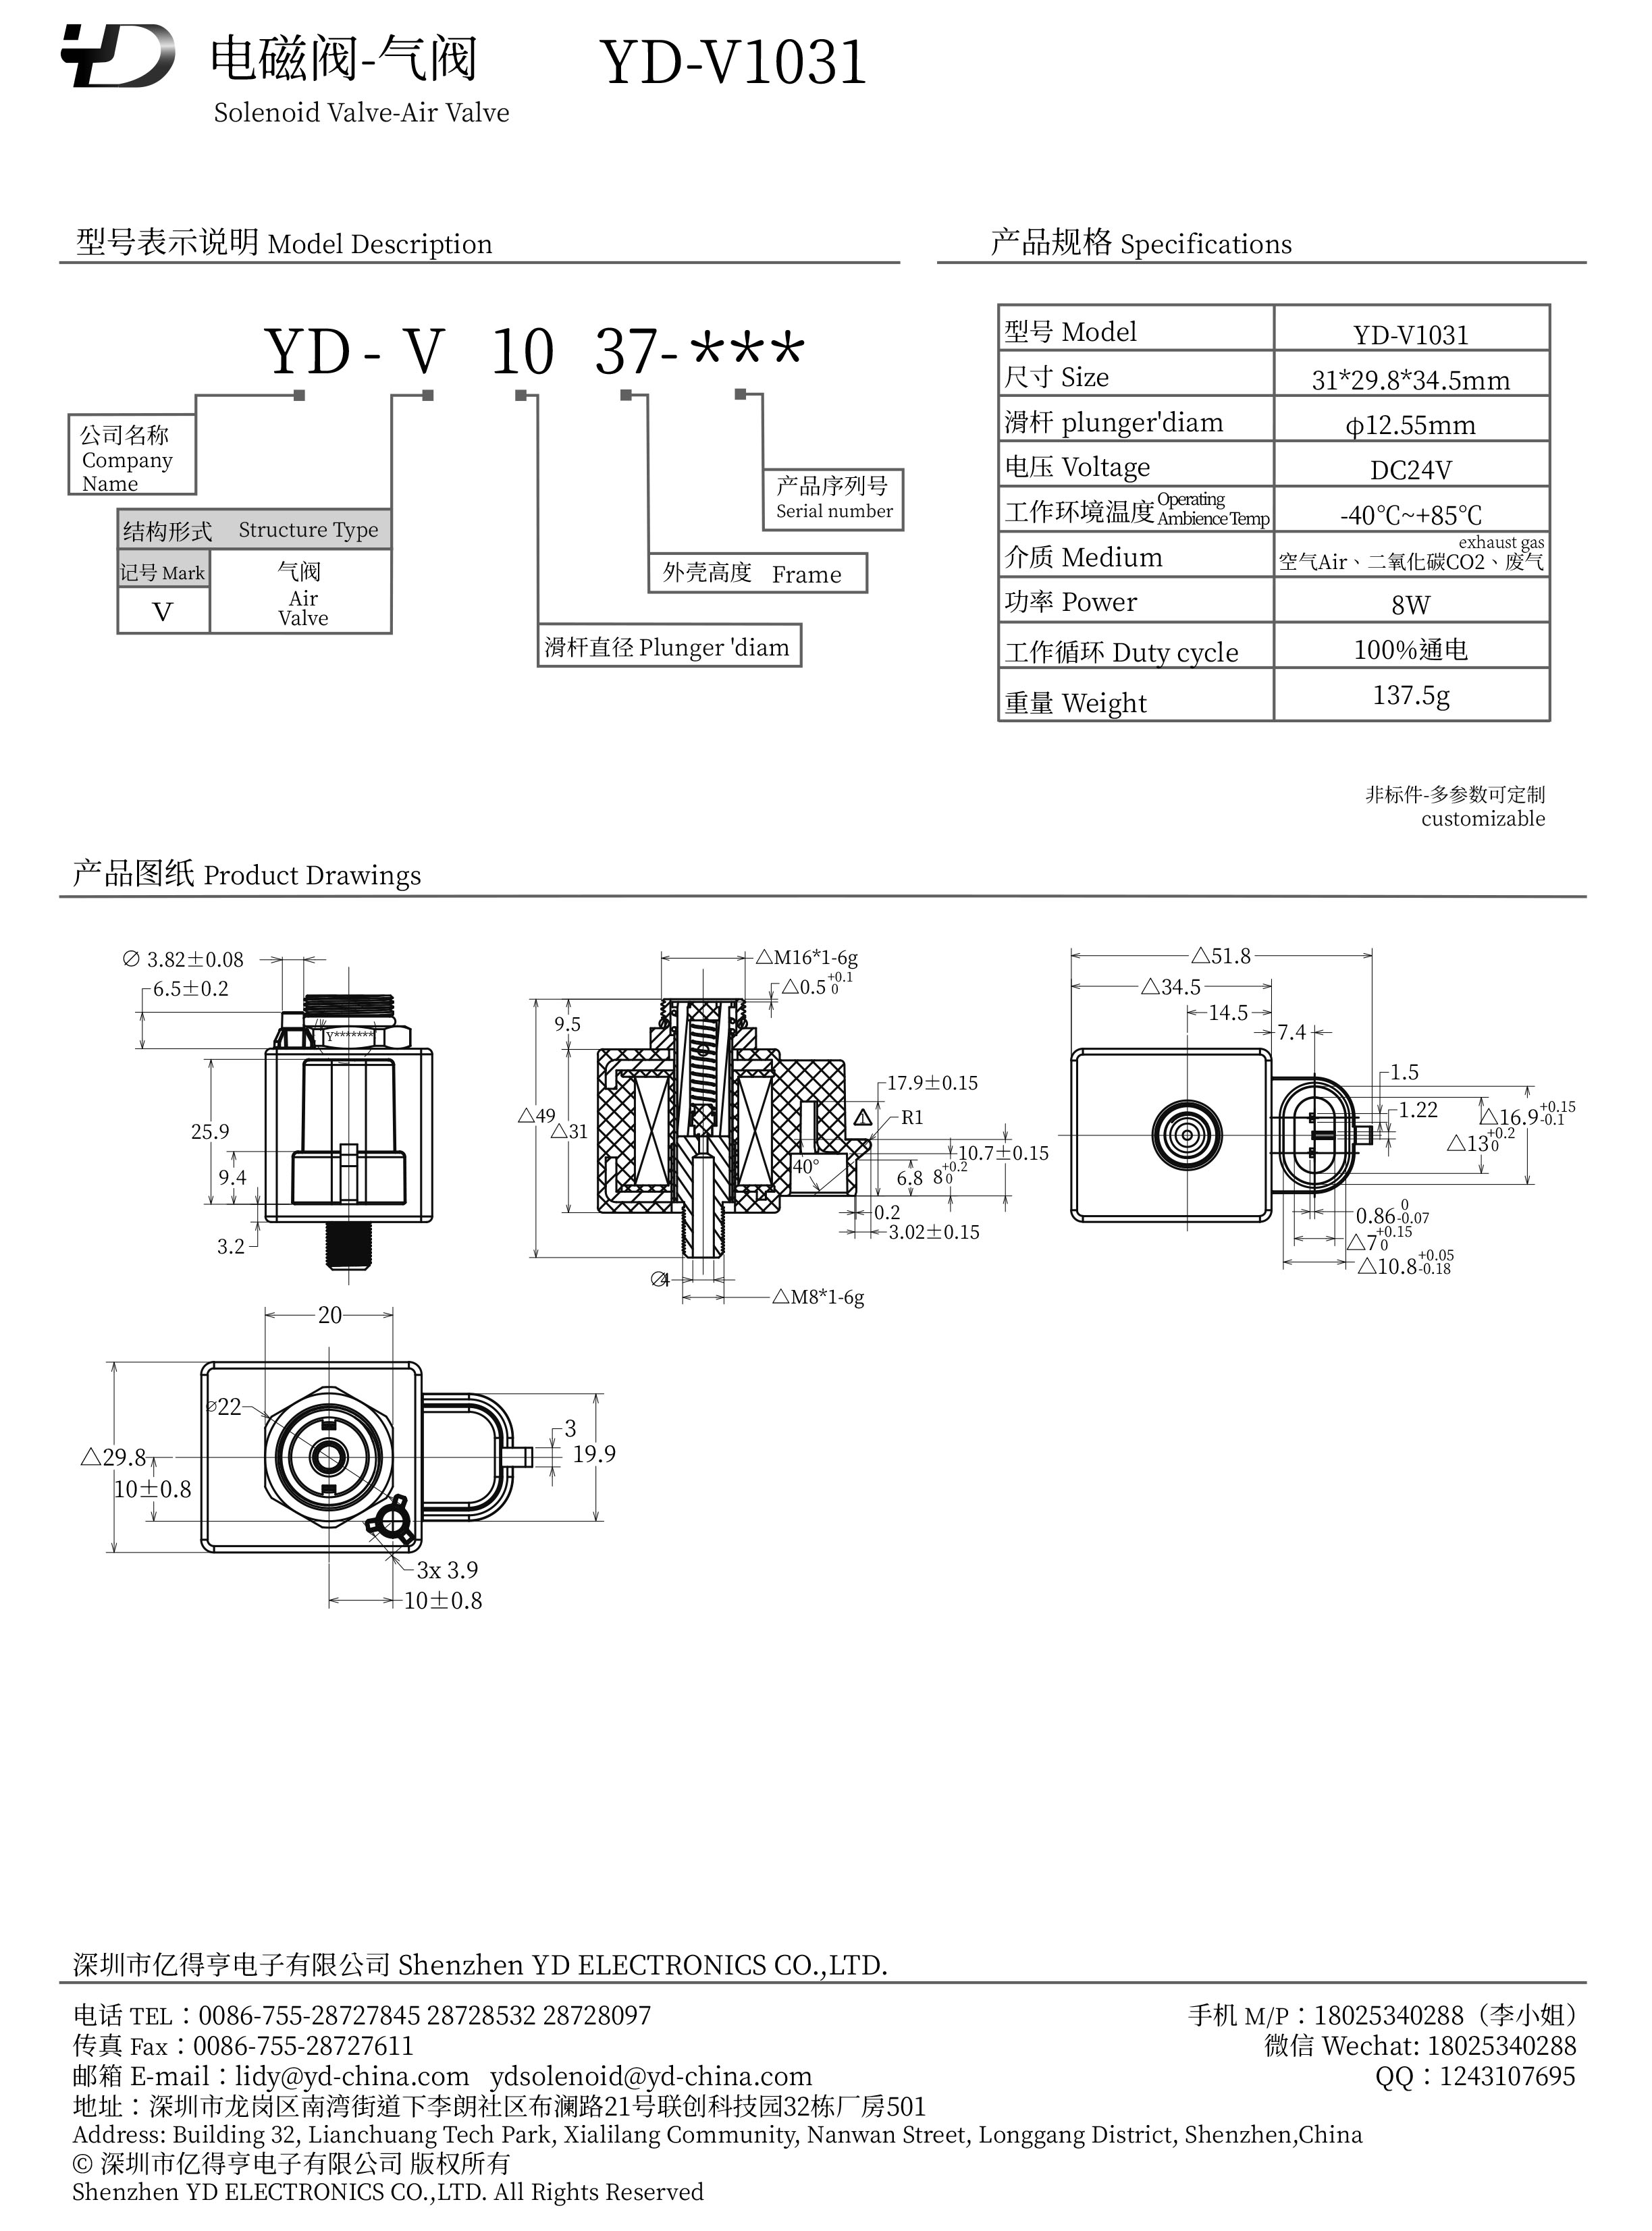 YD-V1031-PDF.jpg